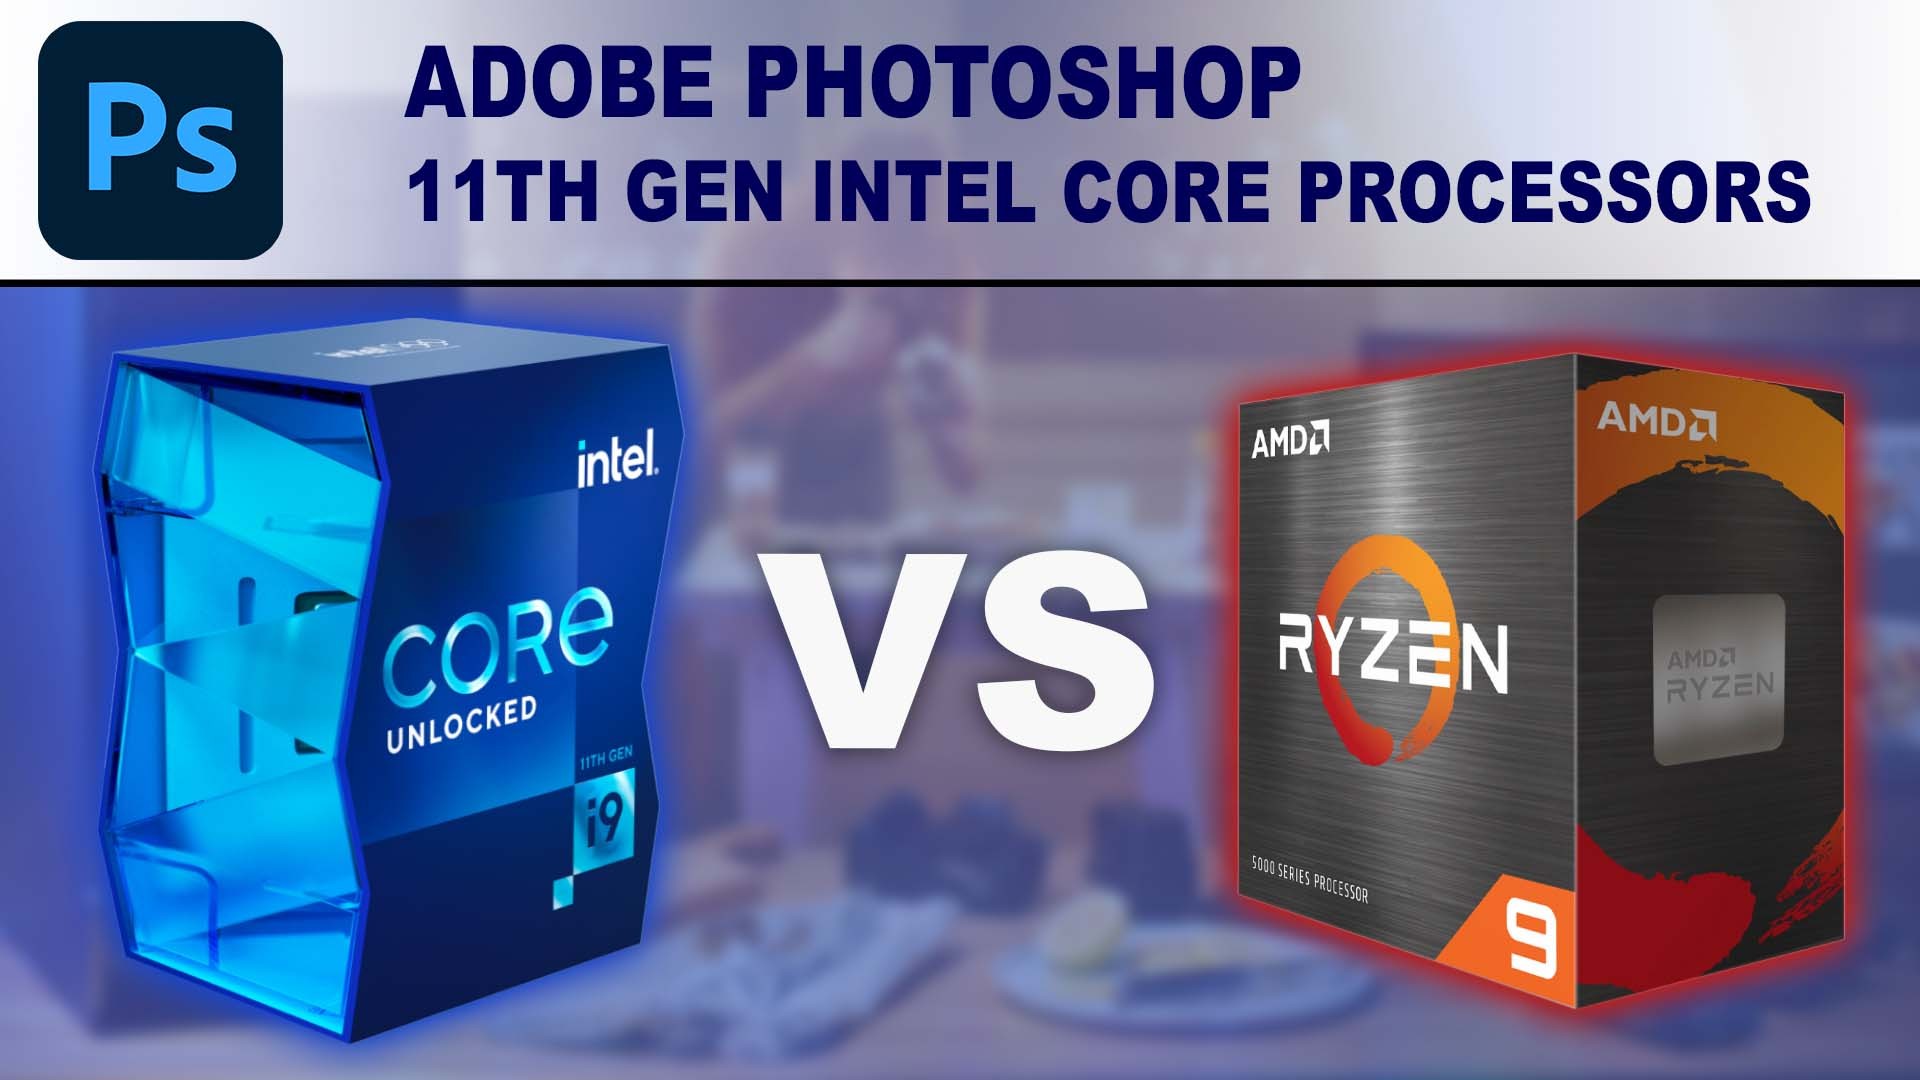 11th Gen Intel Core Processors for Adobe Photoshop